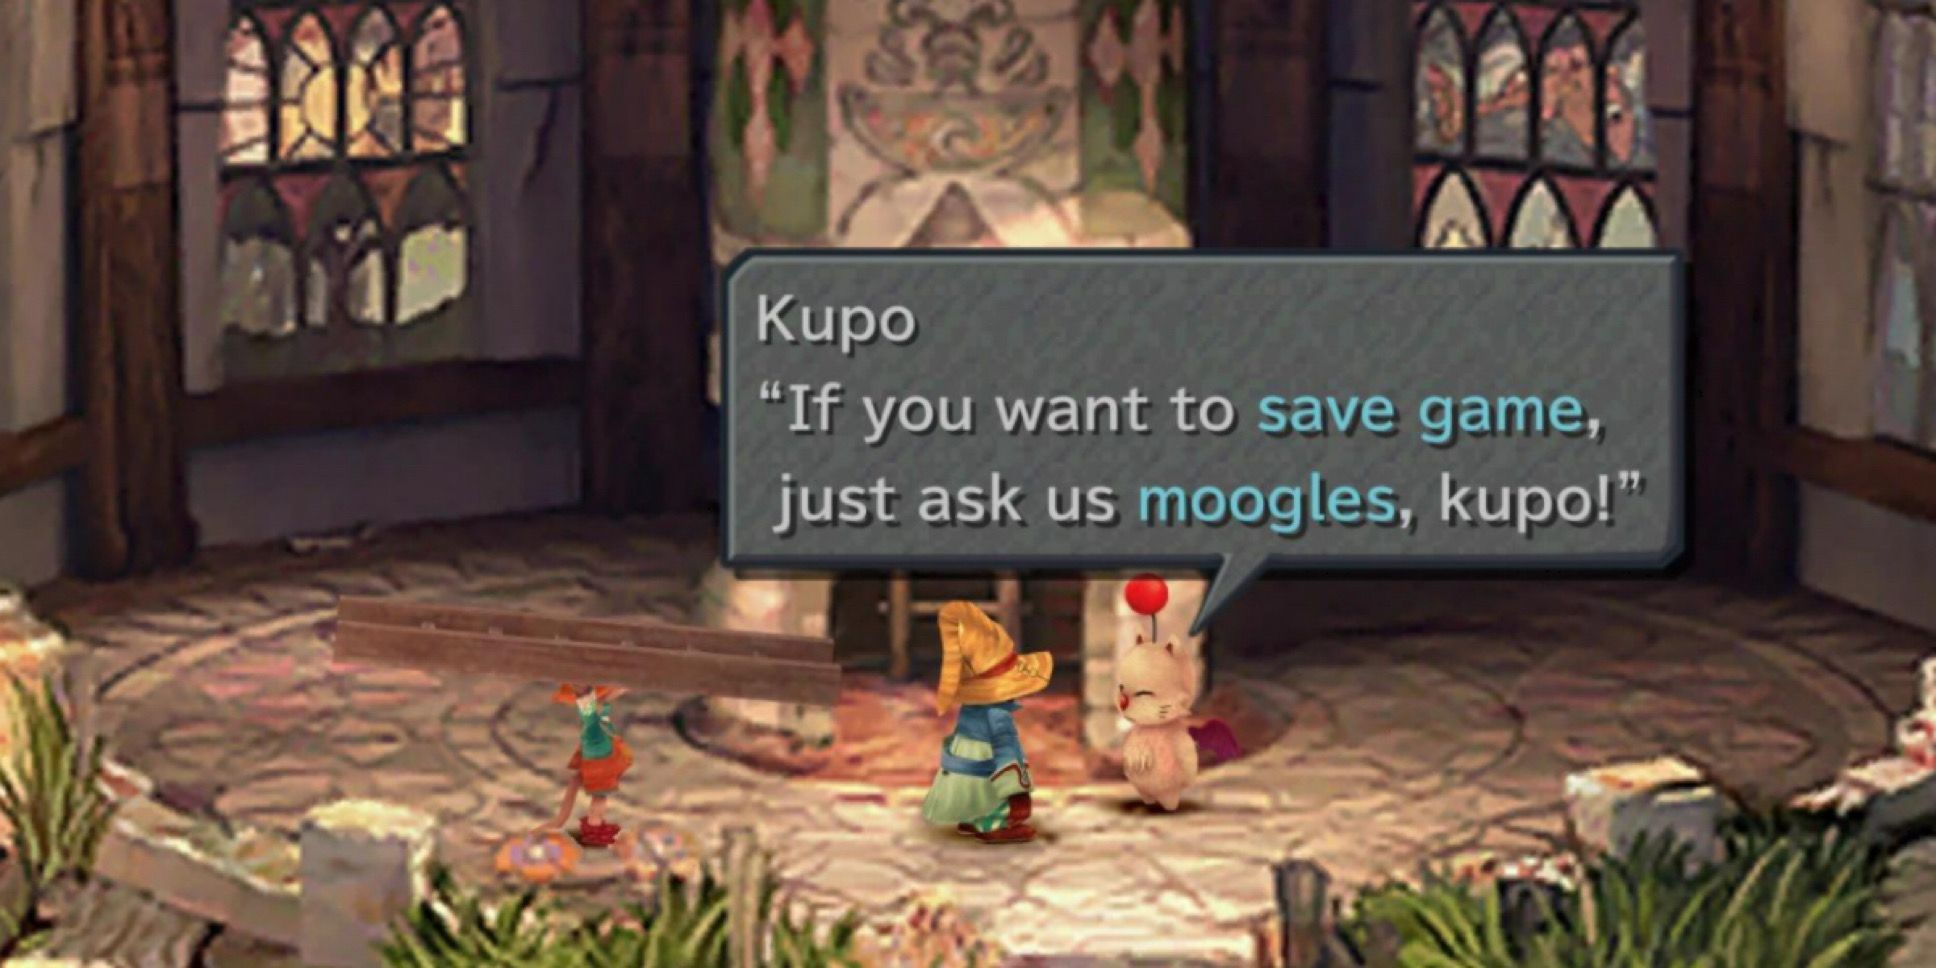 Vivi talking to a Moogle in Final Fantasy